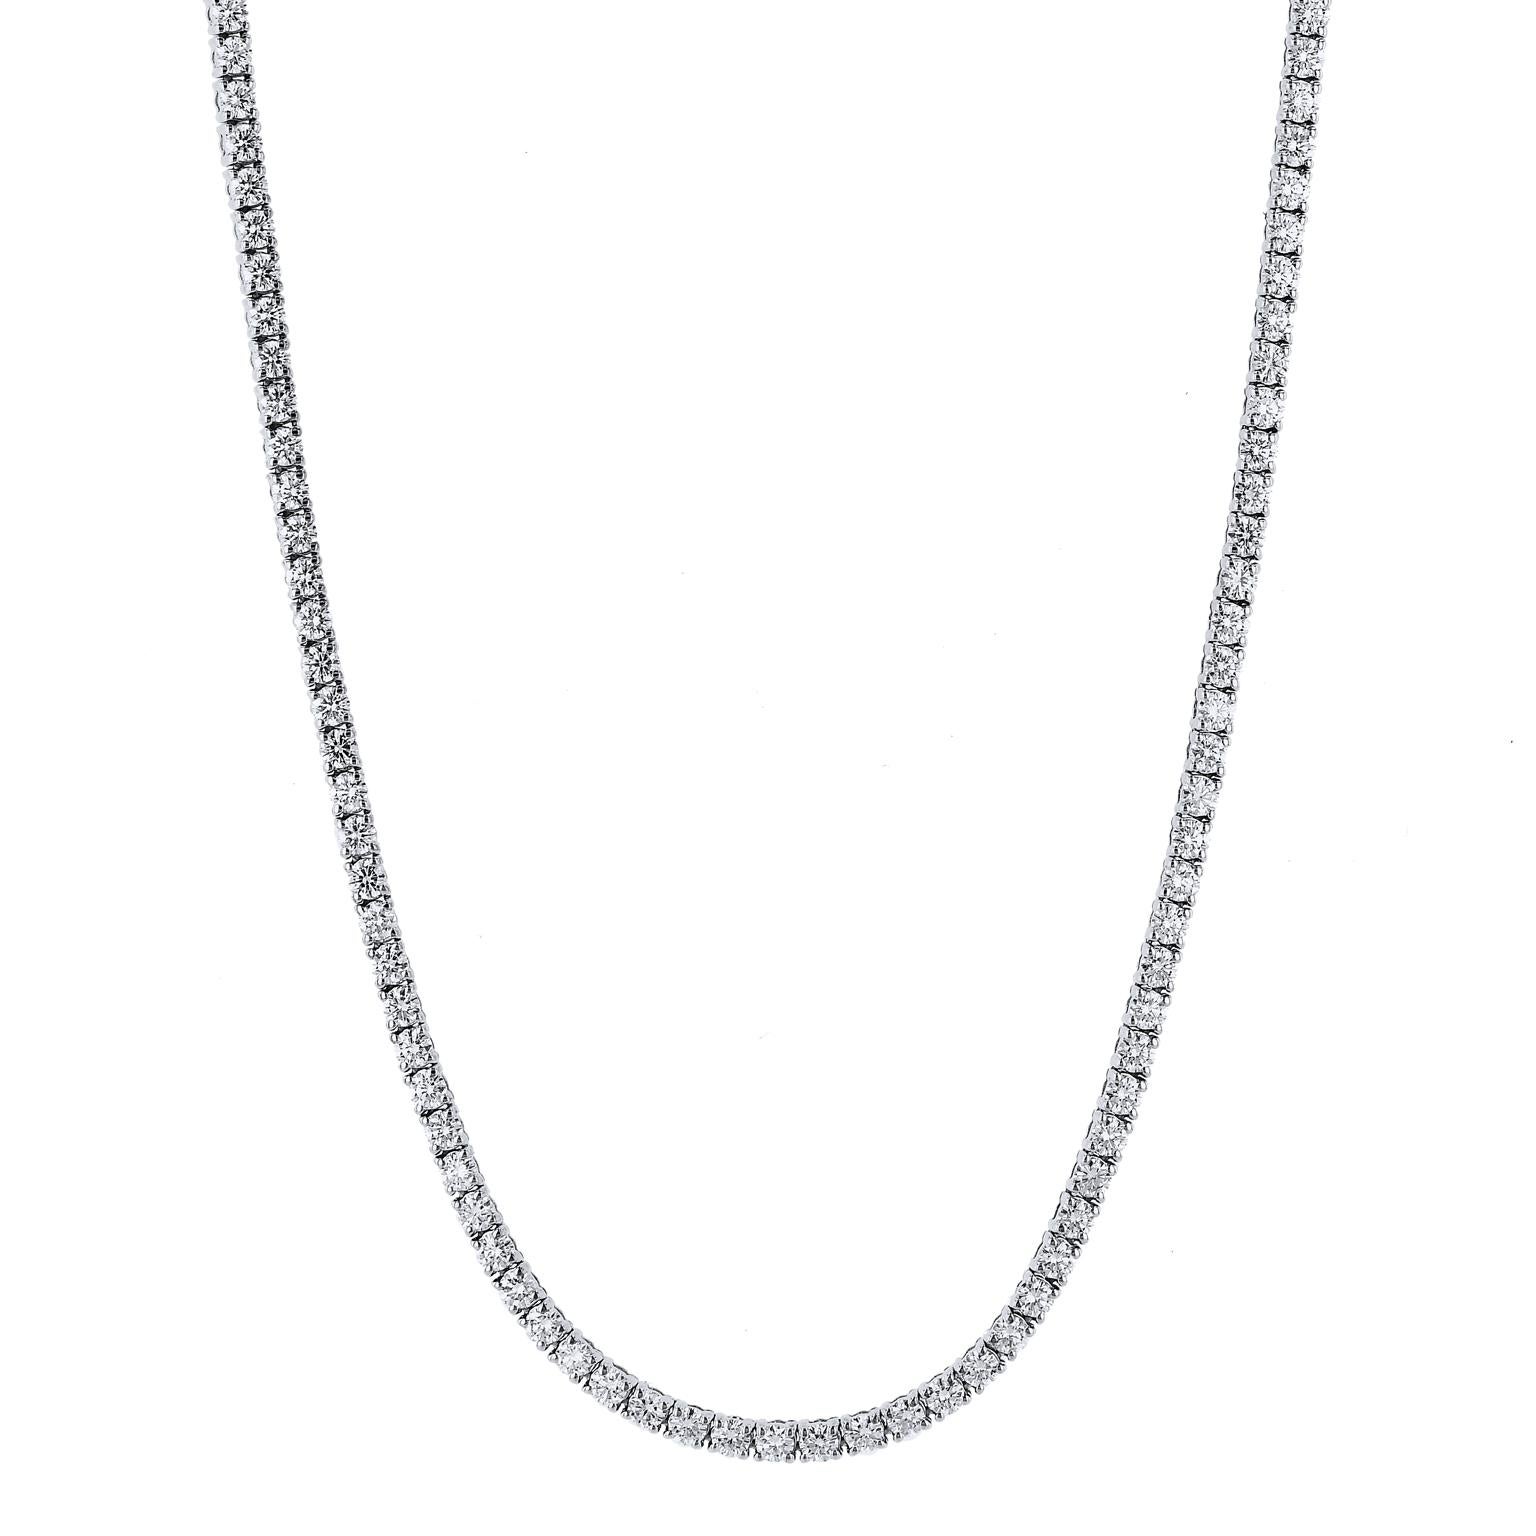 8.27 Carat Diamond Riviera Necklace, set in 18 Karat White Gold 18 Inches Long